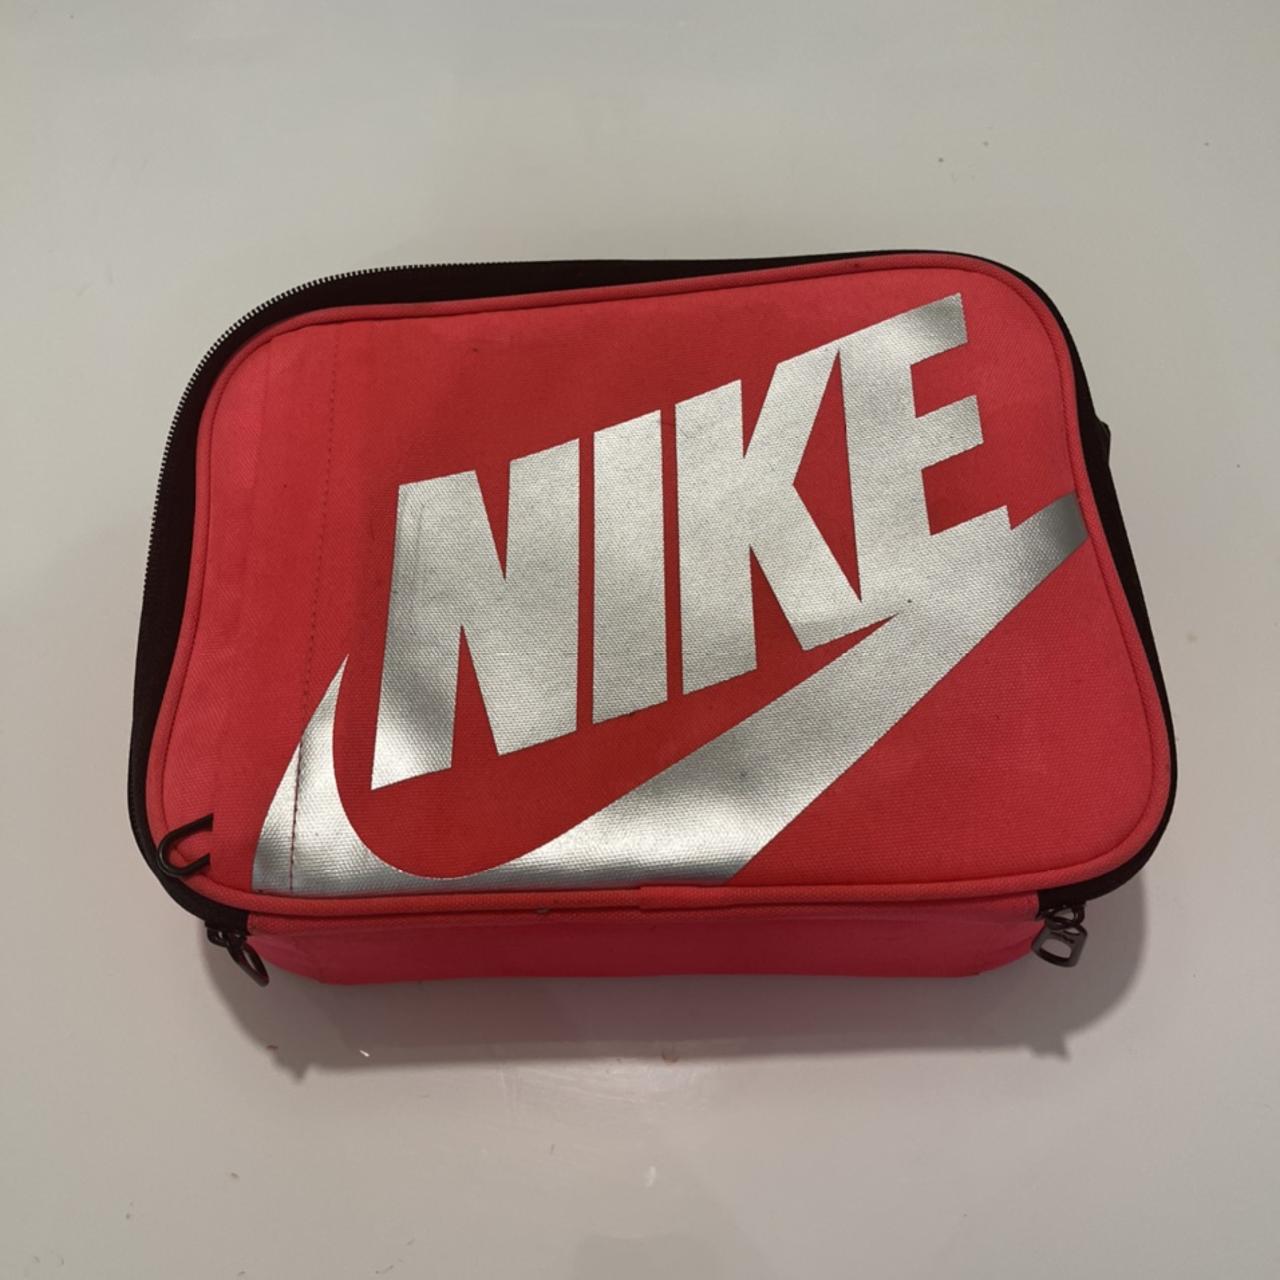 Nike pencil-case - Depop